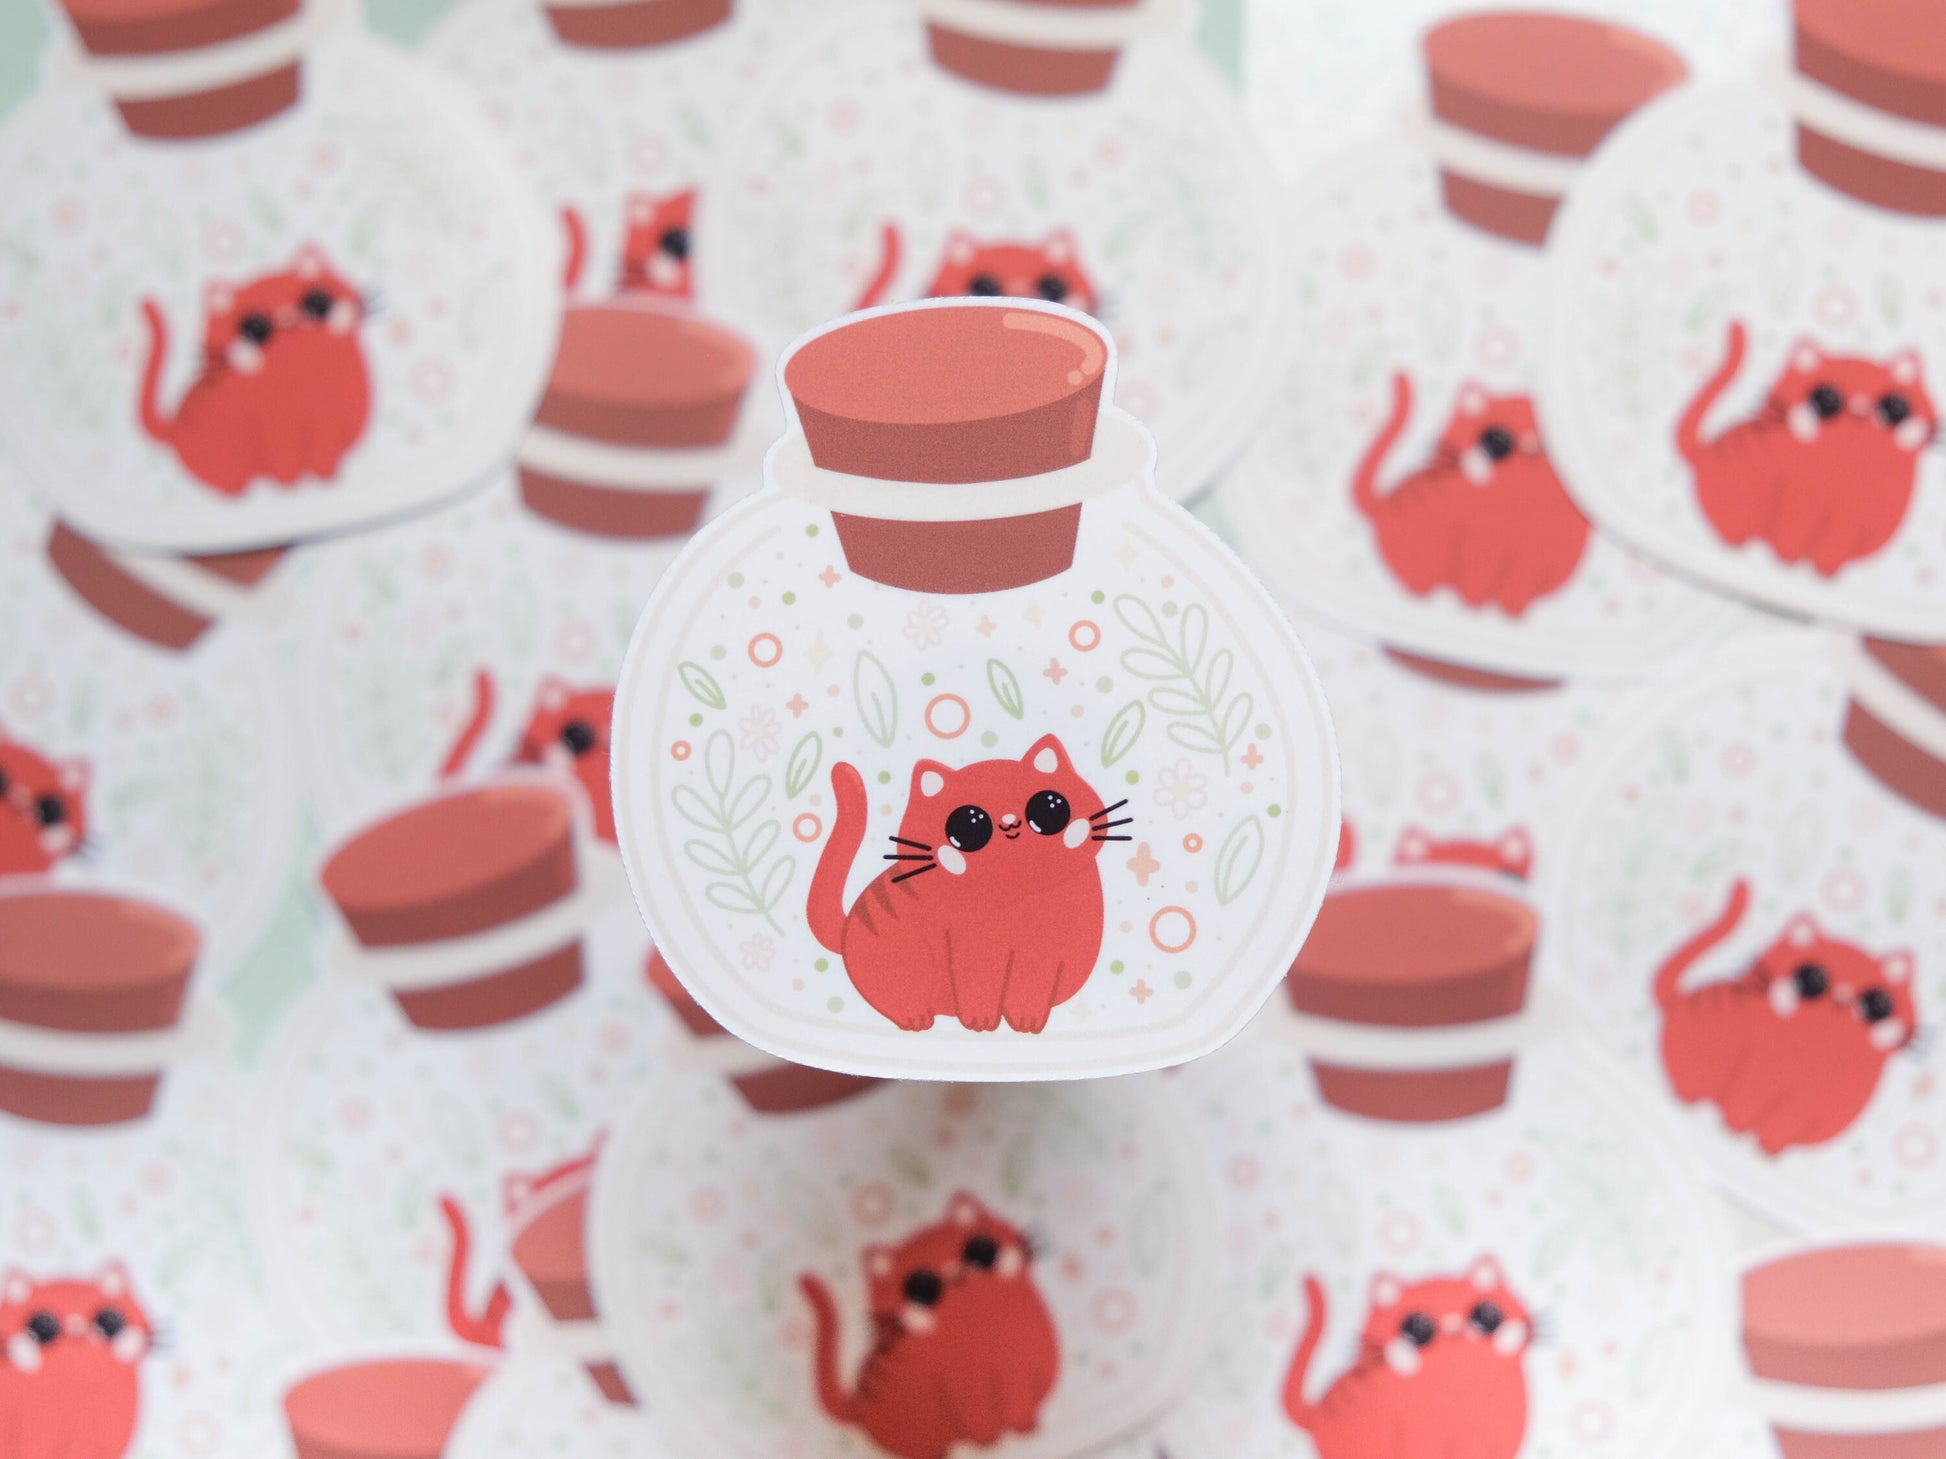 Cute Ginger Cat Potion Sticker - Potion bottle Sticker - Bullet journal Sticker - Planner Sticker